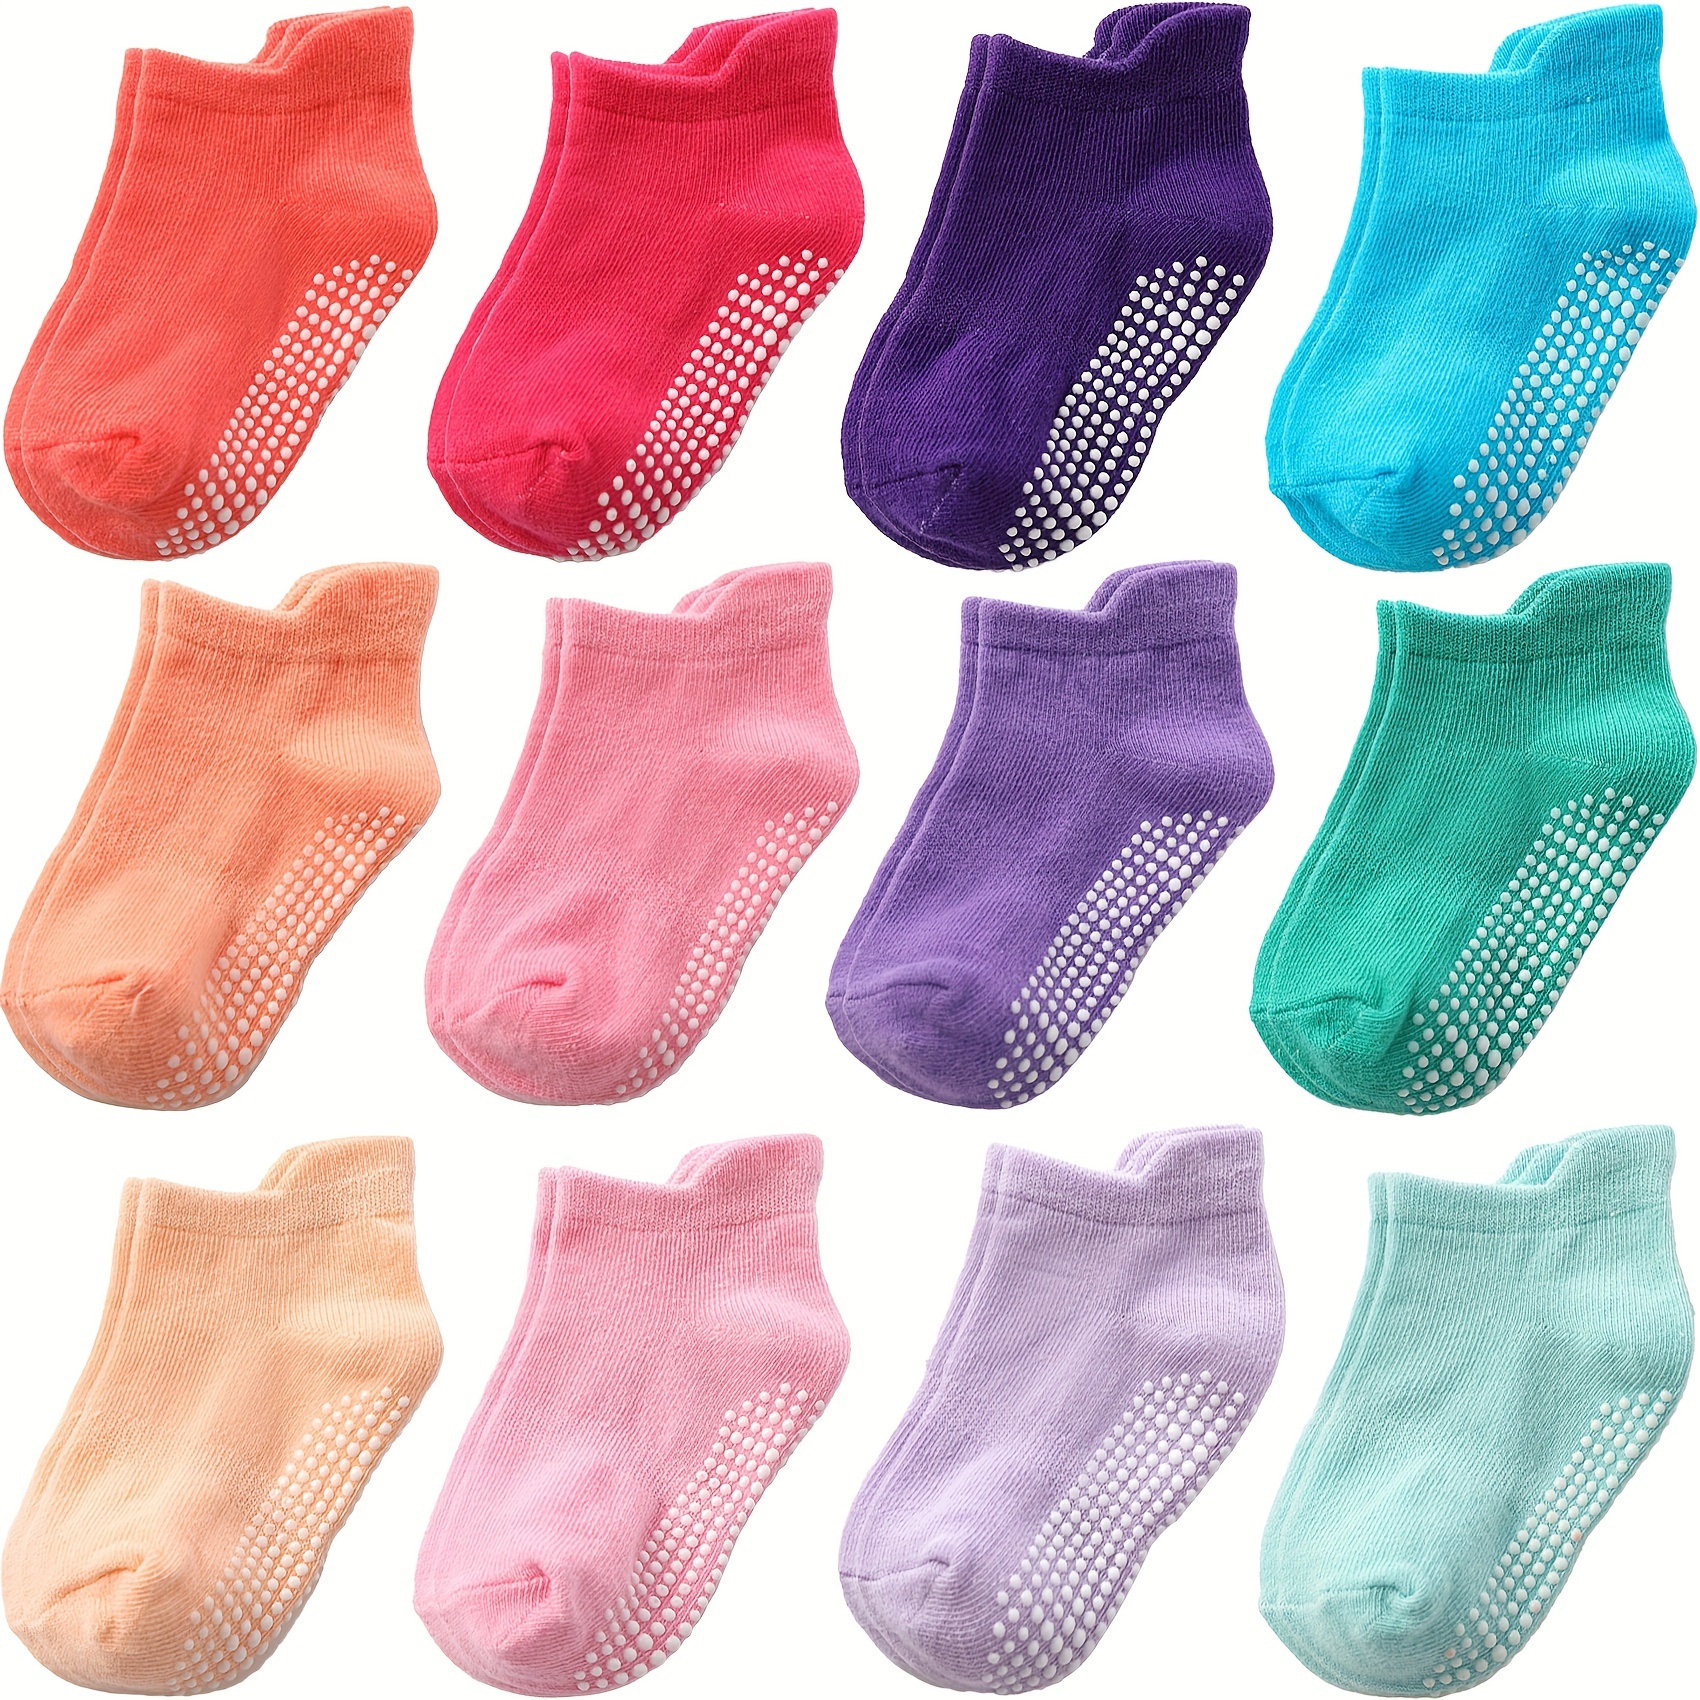 

12-24 Pairs Of Baby Toddler Boys Socks Grip Non Slip Boys Girls Cotton Socks For Kids Ankle Cute Socks 6 Months -7 Years